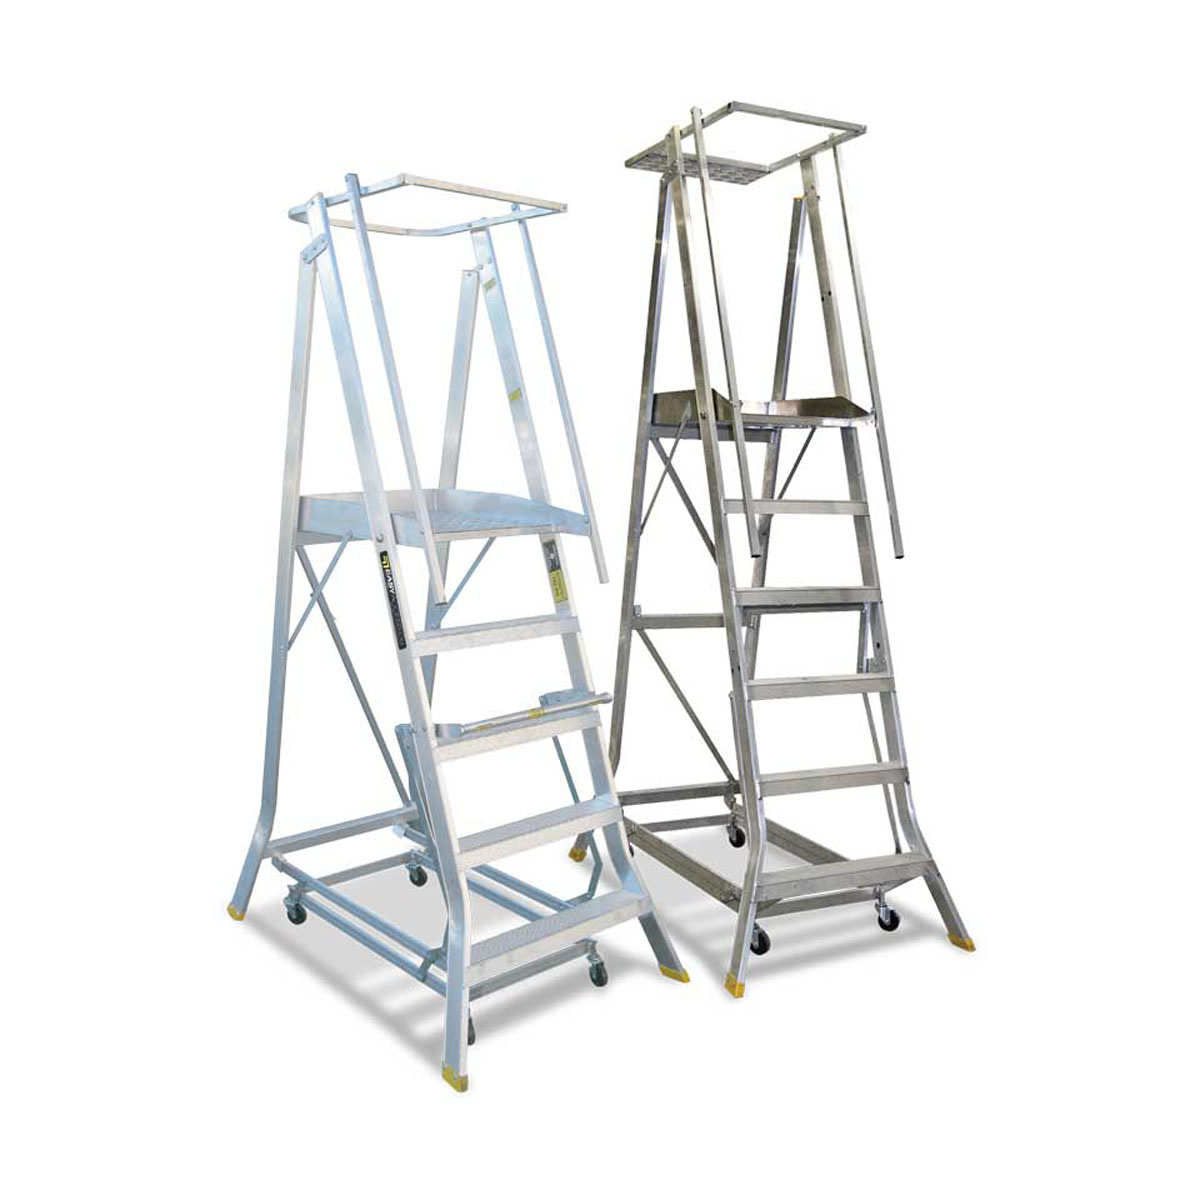 Platform Ladders with Wheels NZ